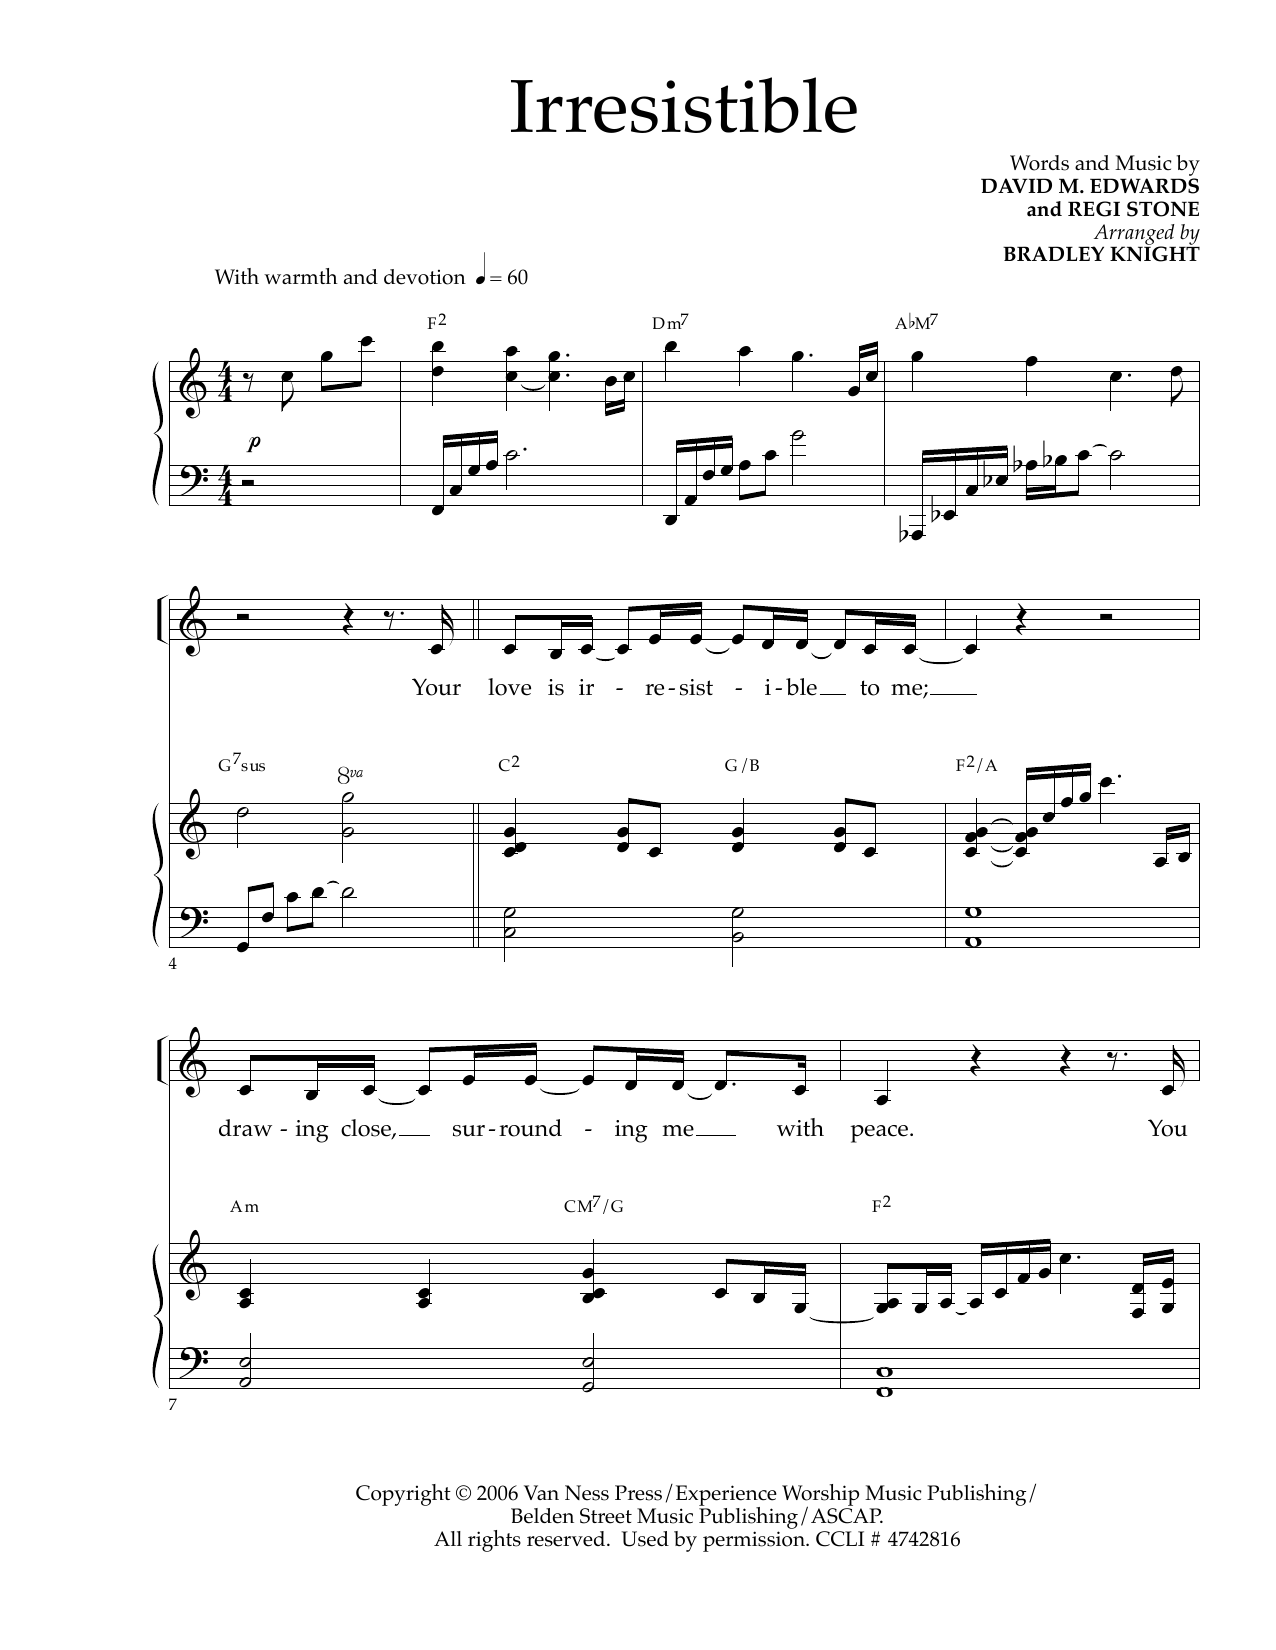 David M. Edwards and Regi Stone Irresistible (arr. Bradley Knight) Sheet Music Notes & Chords for SATB Choir - Download or Print PDF